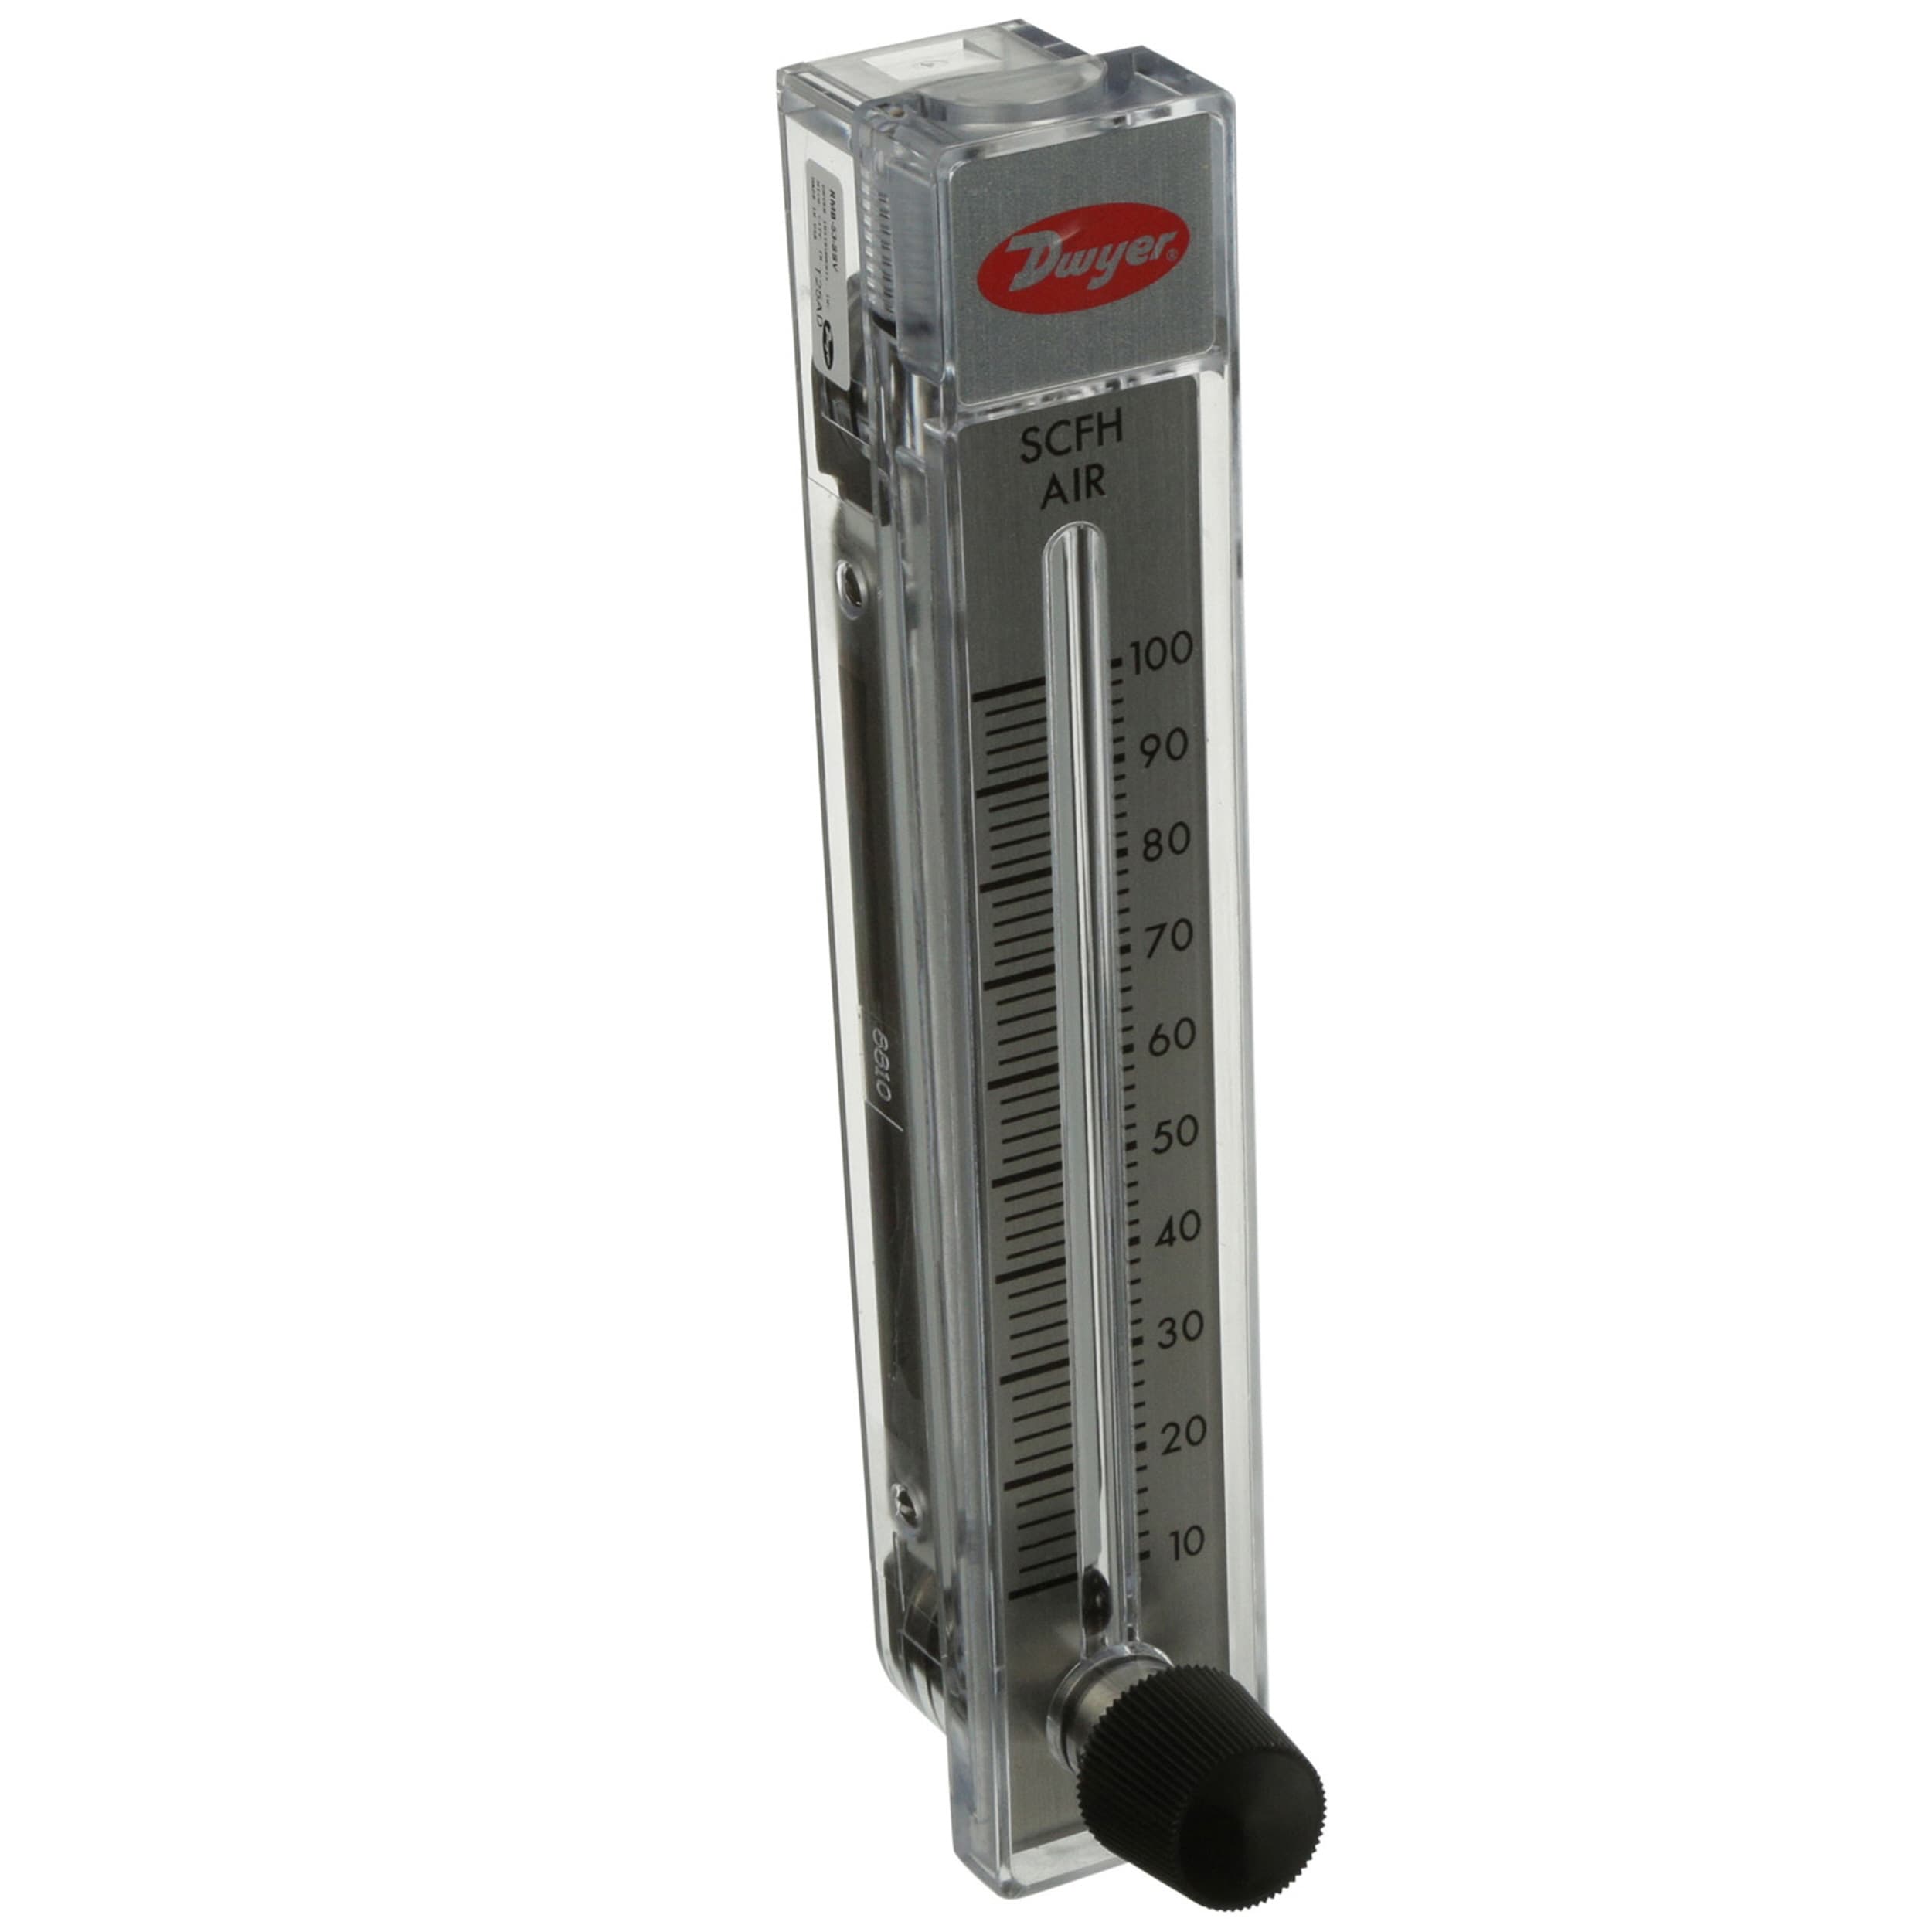 up to 2 Dwyer Rate Master Air Flowmeter 0-100 SCFH Rmb-53-ssv for sale online 